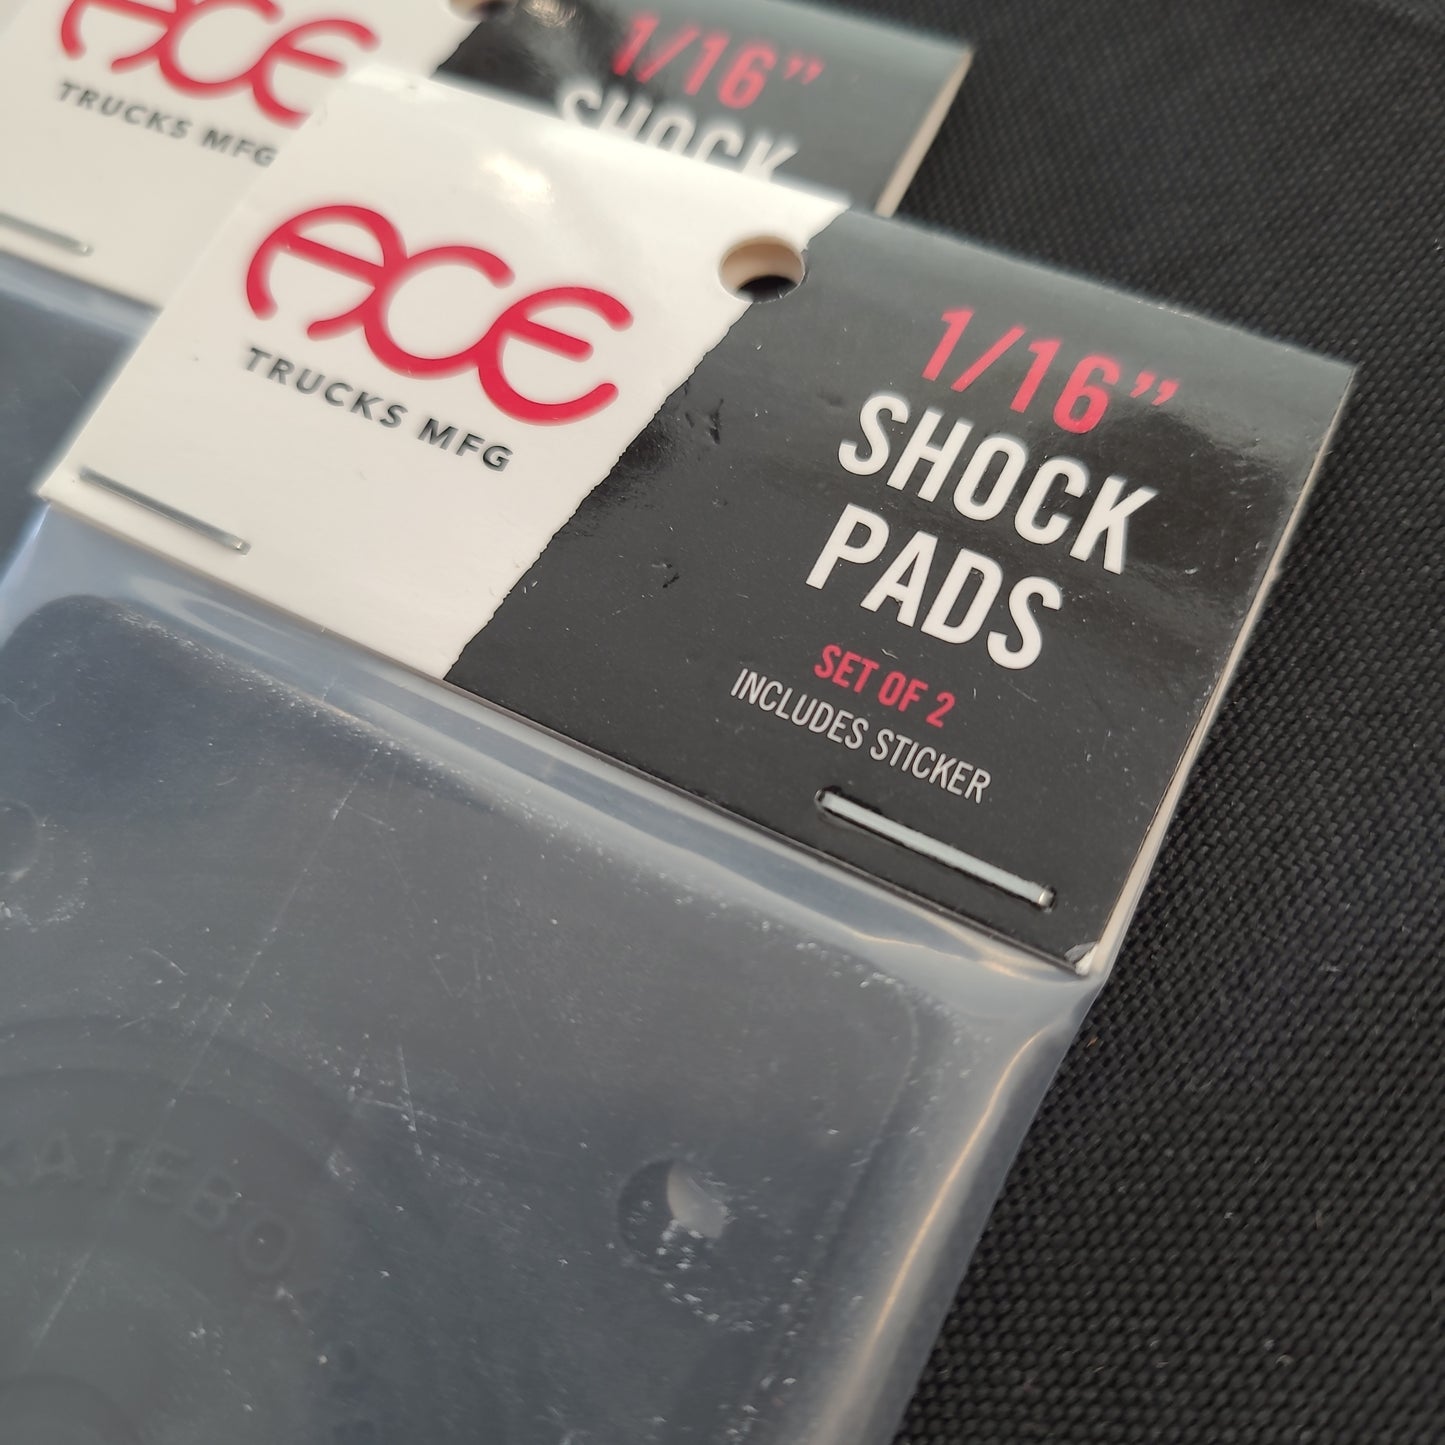 Ace - 1/16" Shock Pads